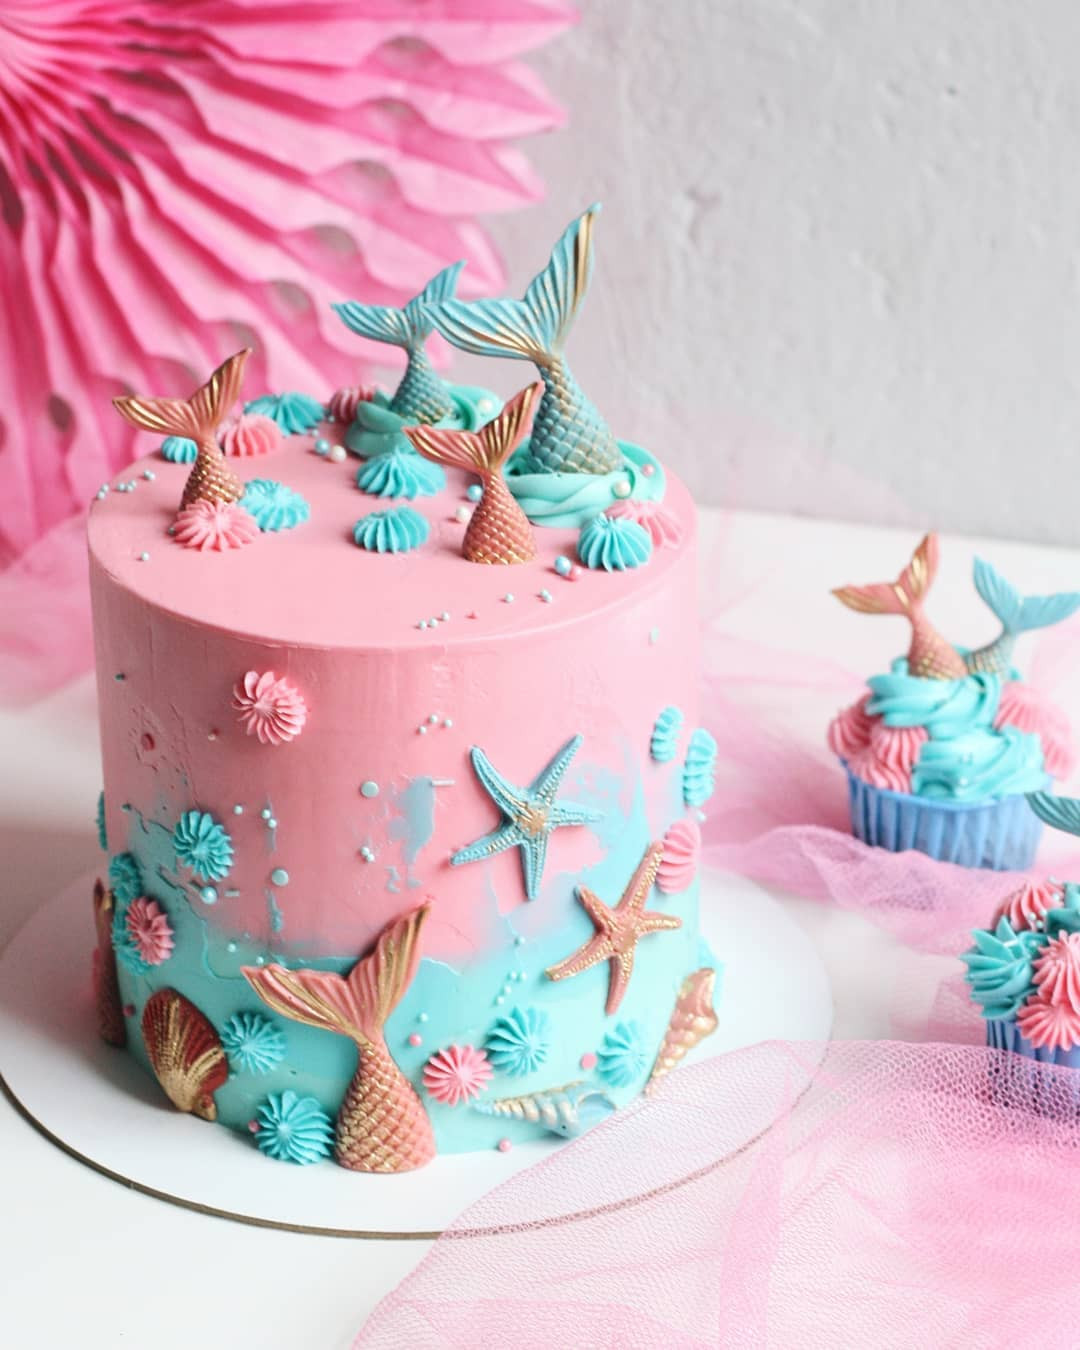 52 Mermaid Cakes Ideas You Are Sure to Love,mermaid cake ideas sheet cake,mermaid cake party ideas,mermaid cake template